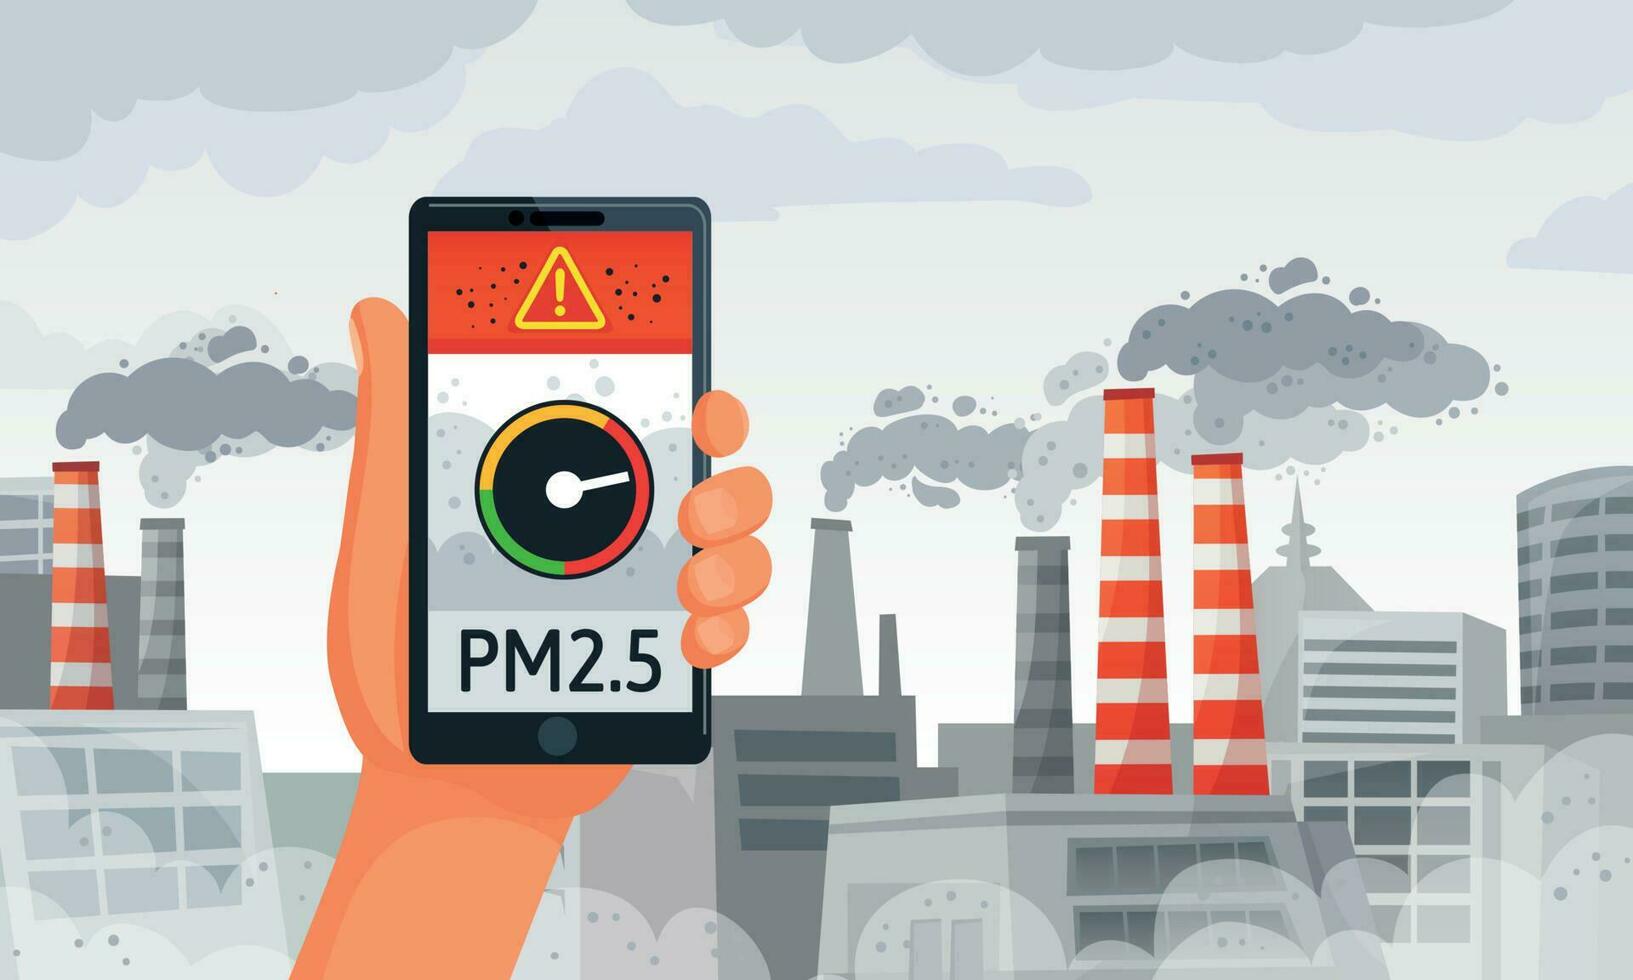 lucht verontreiniging alert. pm2.5 waarschuwingen meter smartphone kennisgeving, vuil lucht en vuil milieu vector illustratie